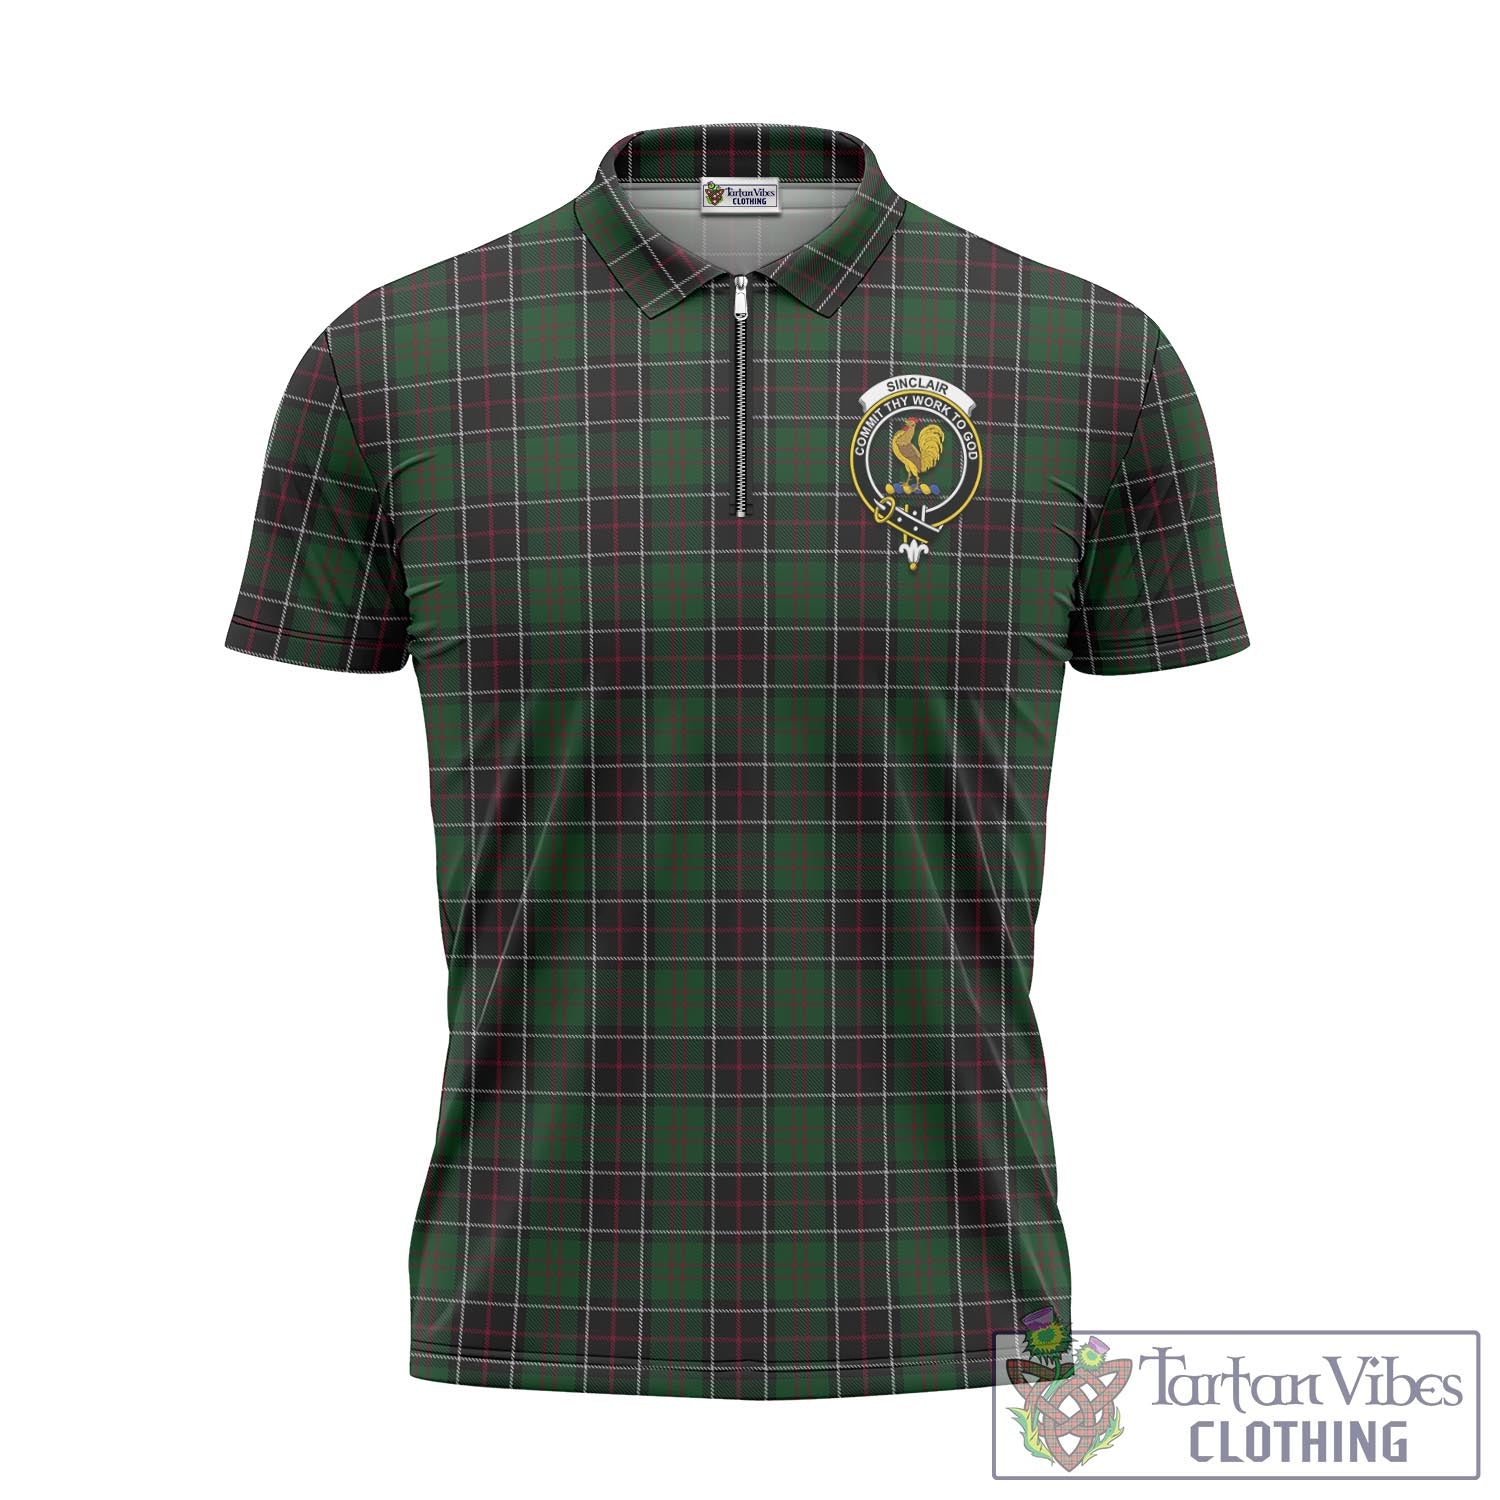 Tartan Vibes Clothing Sinclair Hunting Tartan Zipper Polo Shirt with Family Crest